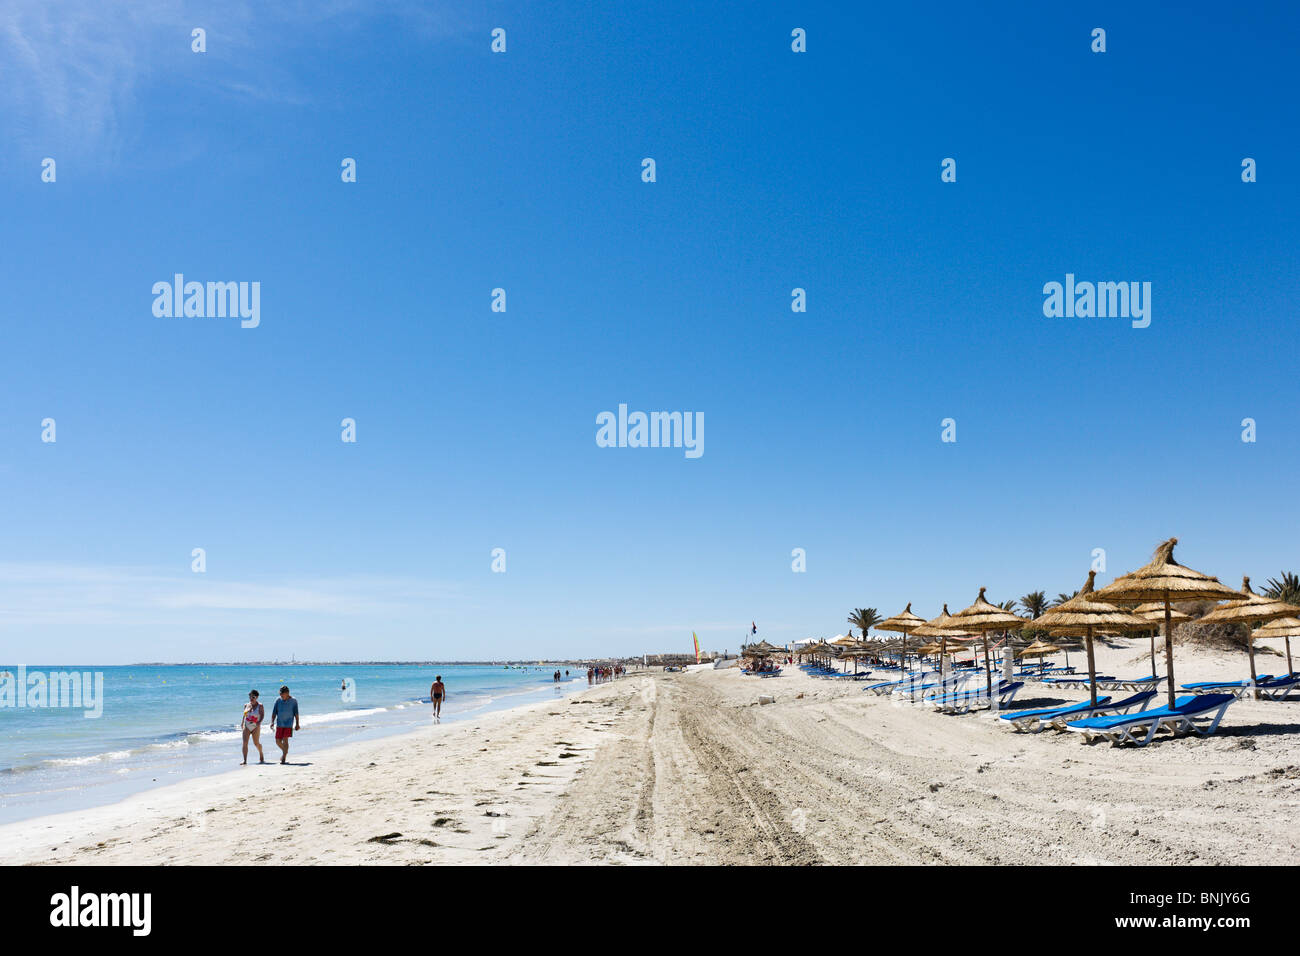 Beach in the hotel zone near to the Hotel Club Caribbean World, Aghir, Djerba, Tunisia Stock Photo